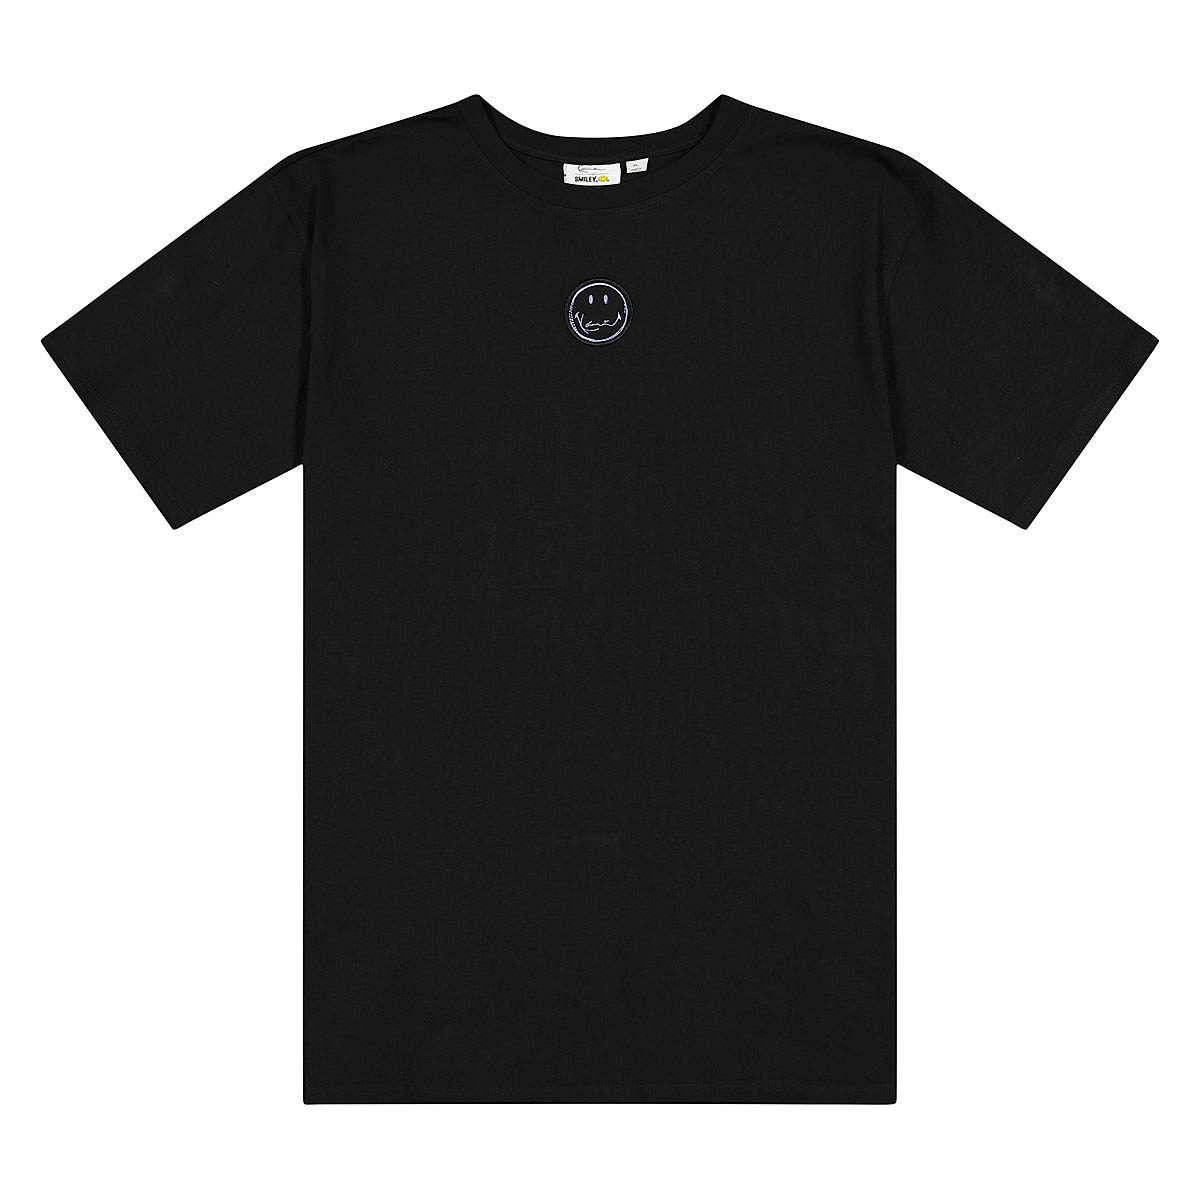 Karl Kani Small Signature Smiley Print T-Shirt, Black/White